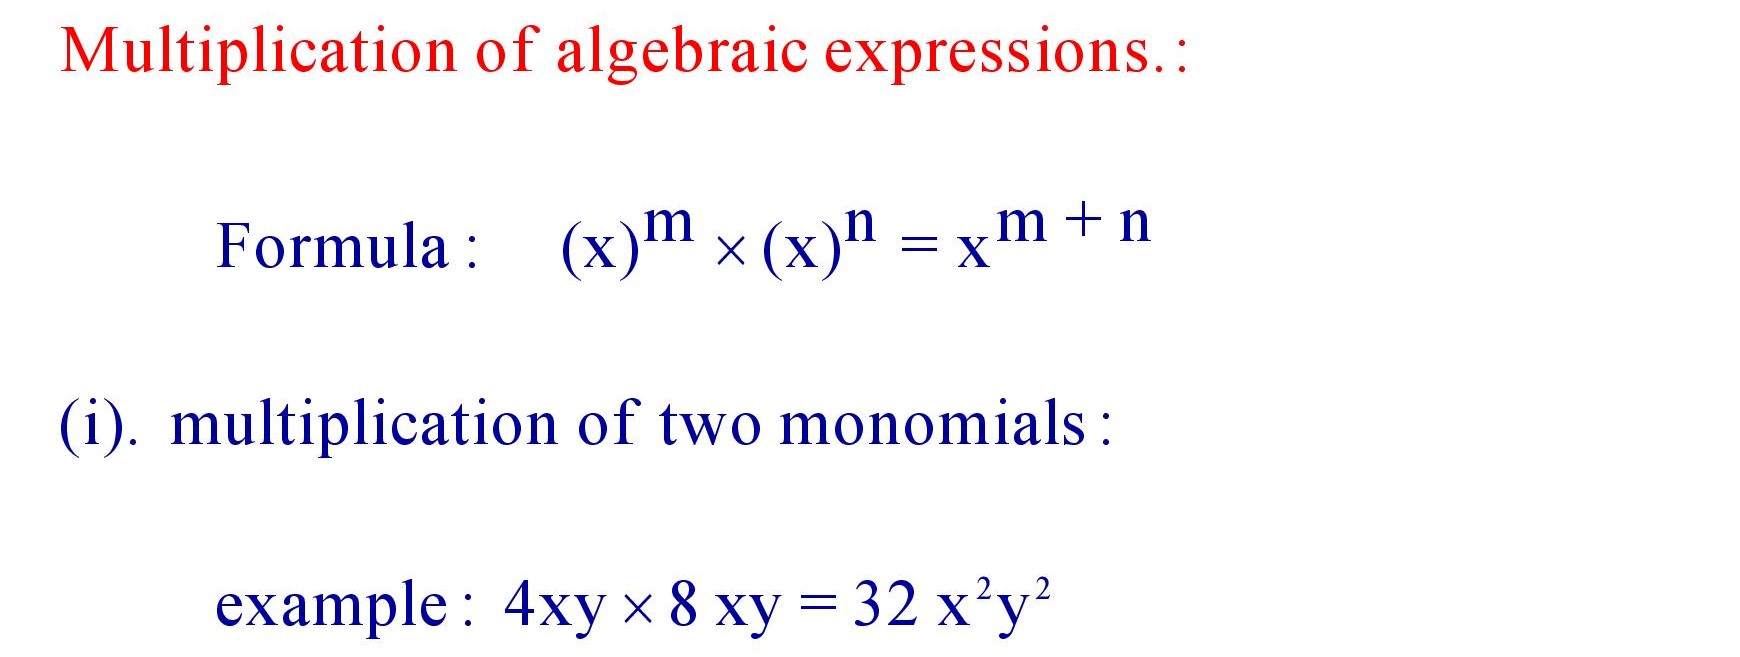 Multiplication of algebraic expressions